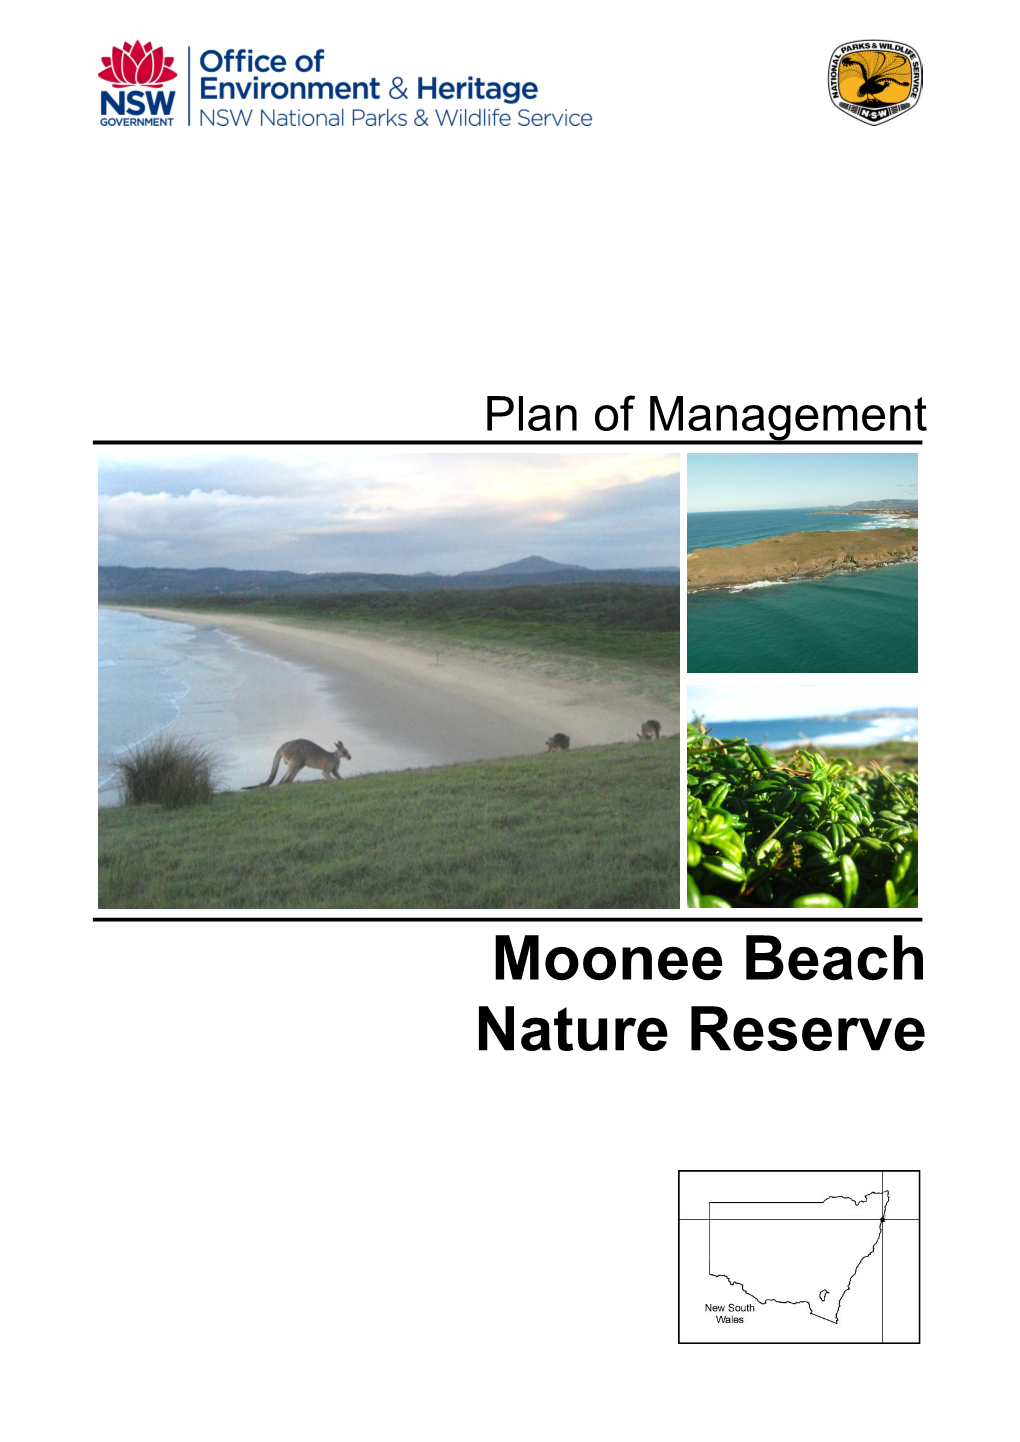 Moonee Beach Nature Reserve